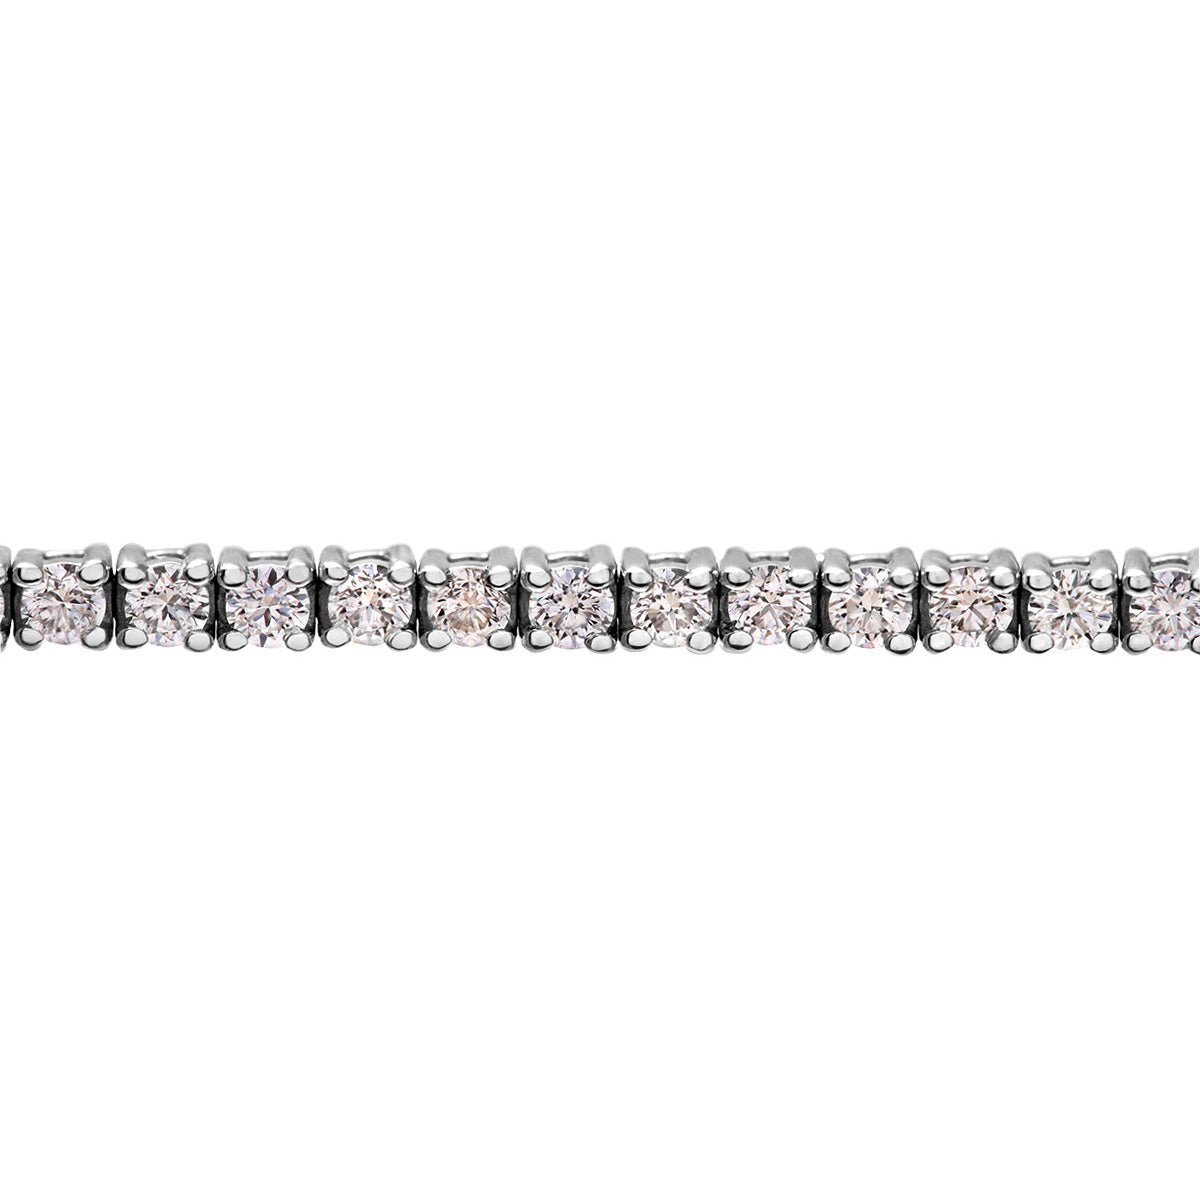 18ct White Gold  3ct Diamond Tennis Tennis Bracelet 7.25 inch - PBCAXL01876W